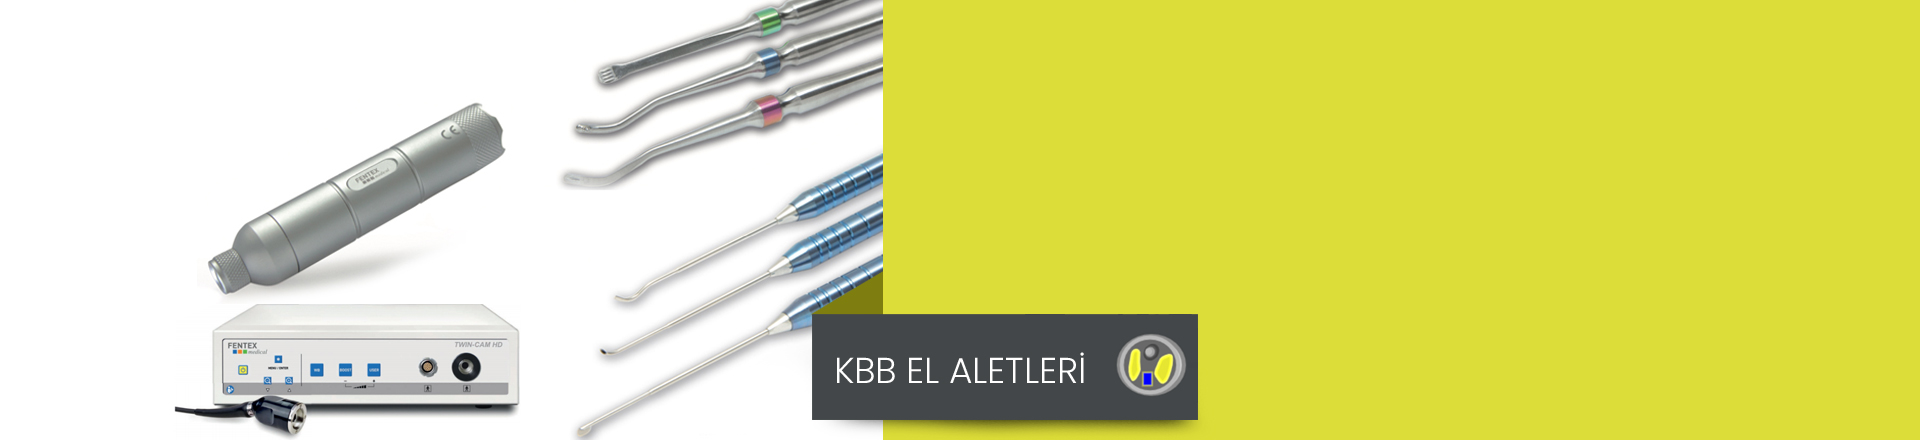 KBB El Aletleri